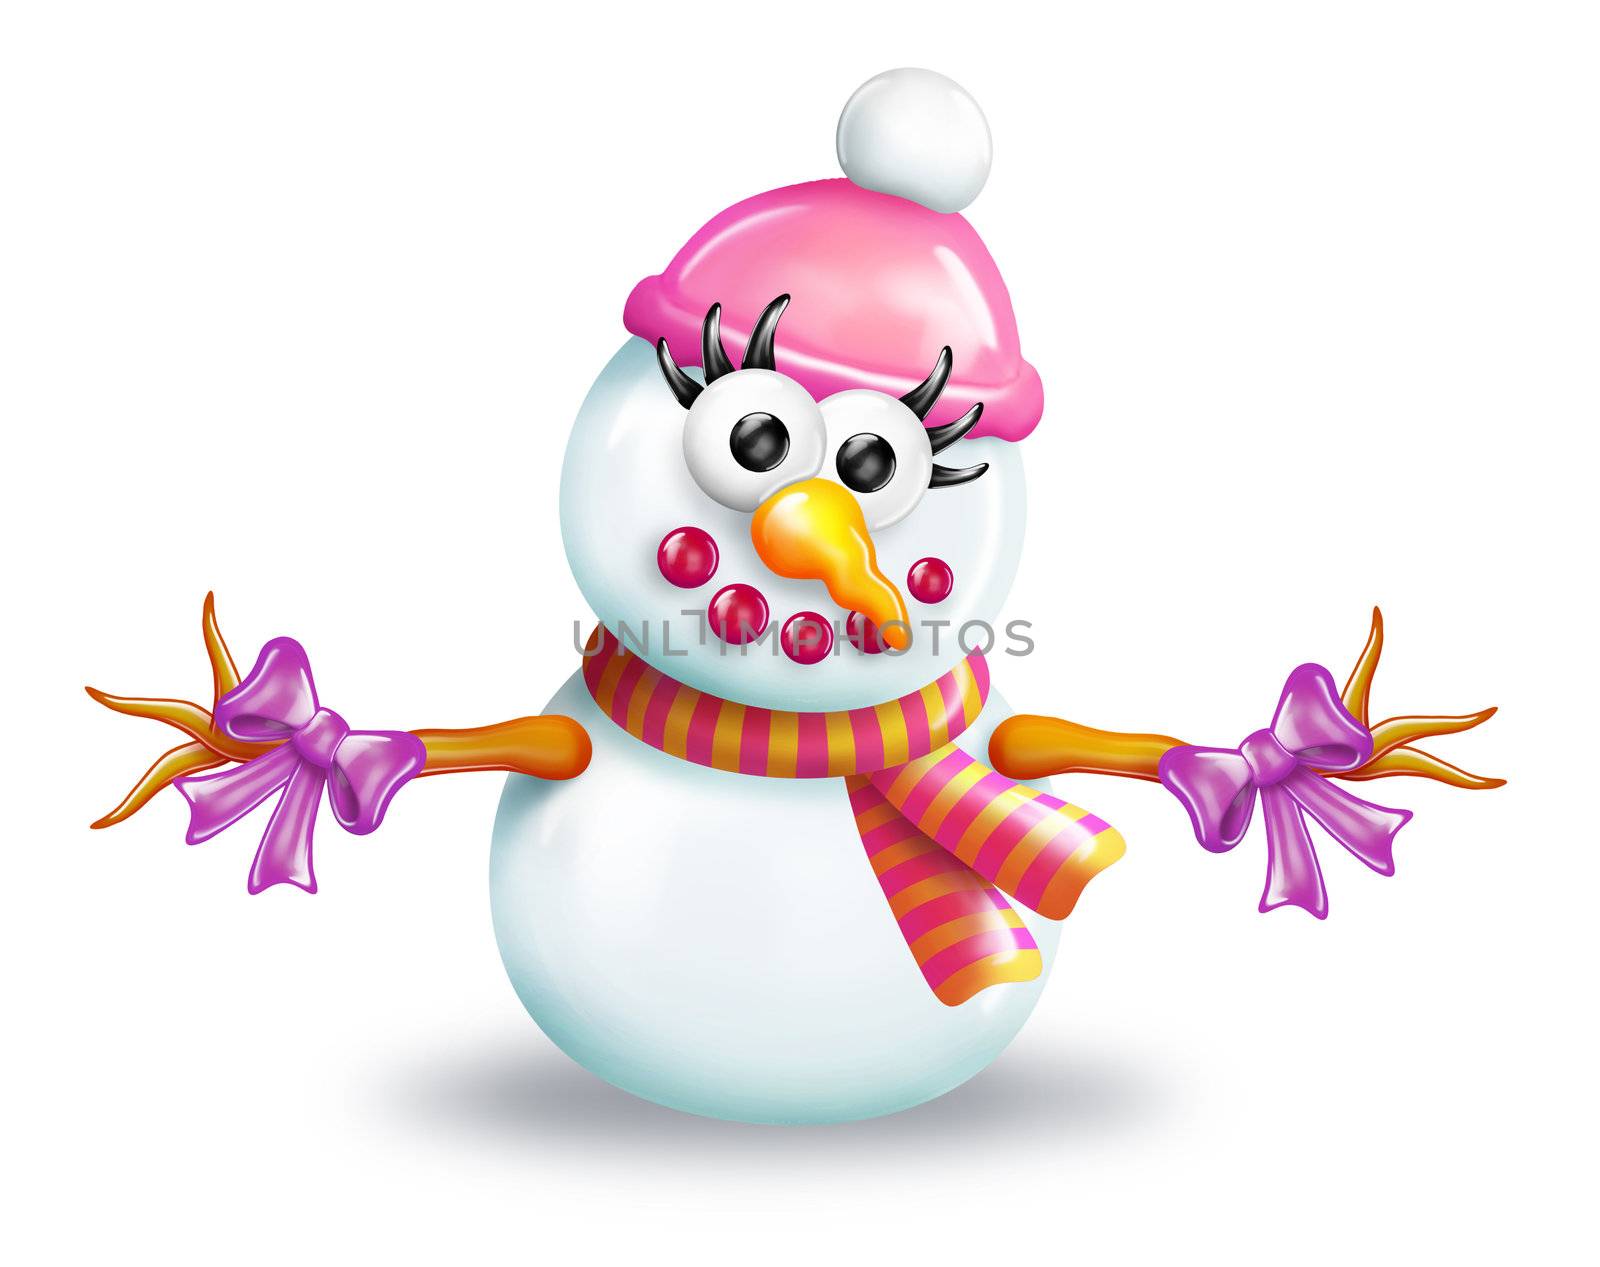 Shiny Snowman Girl by komodoempire